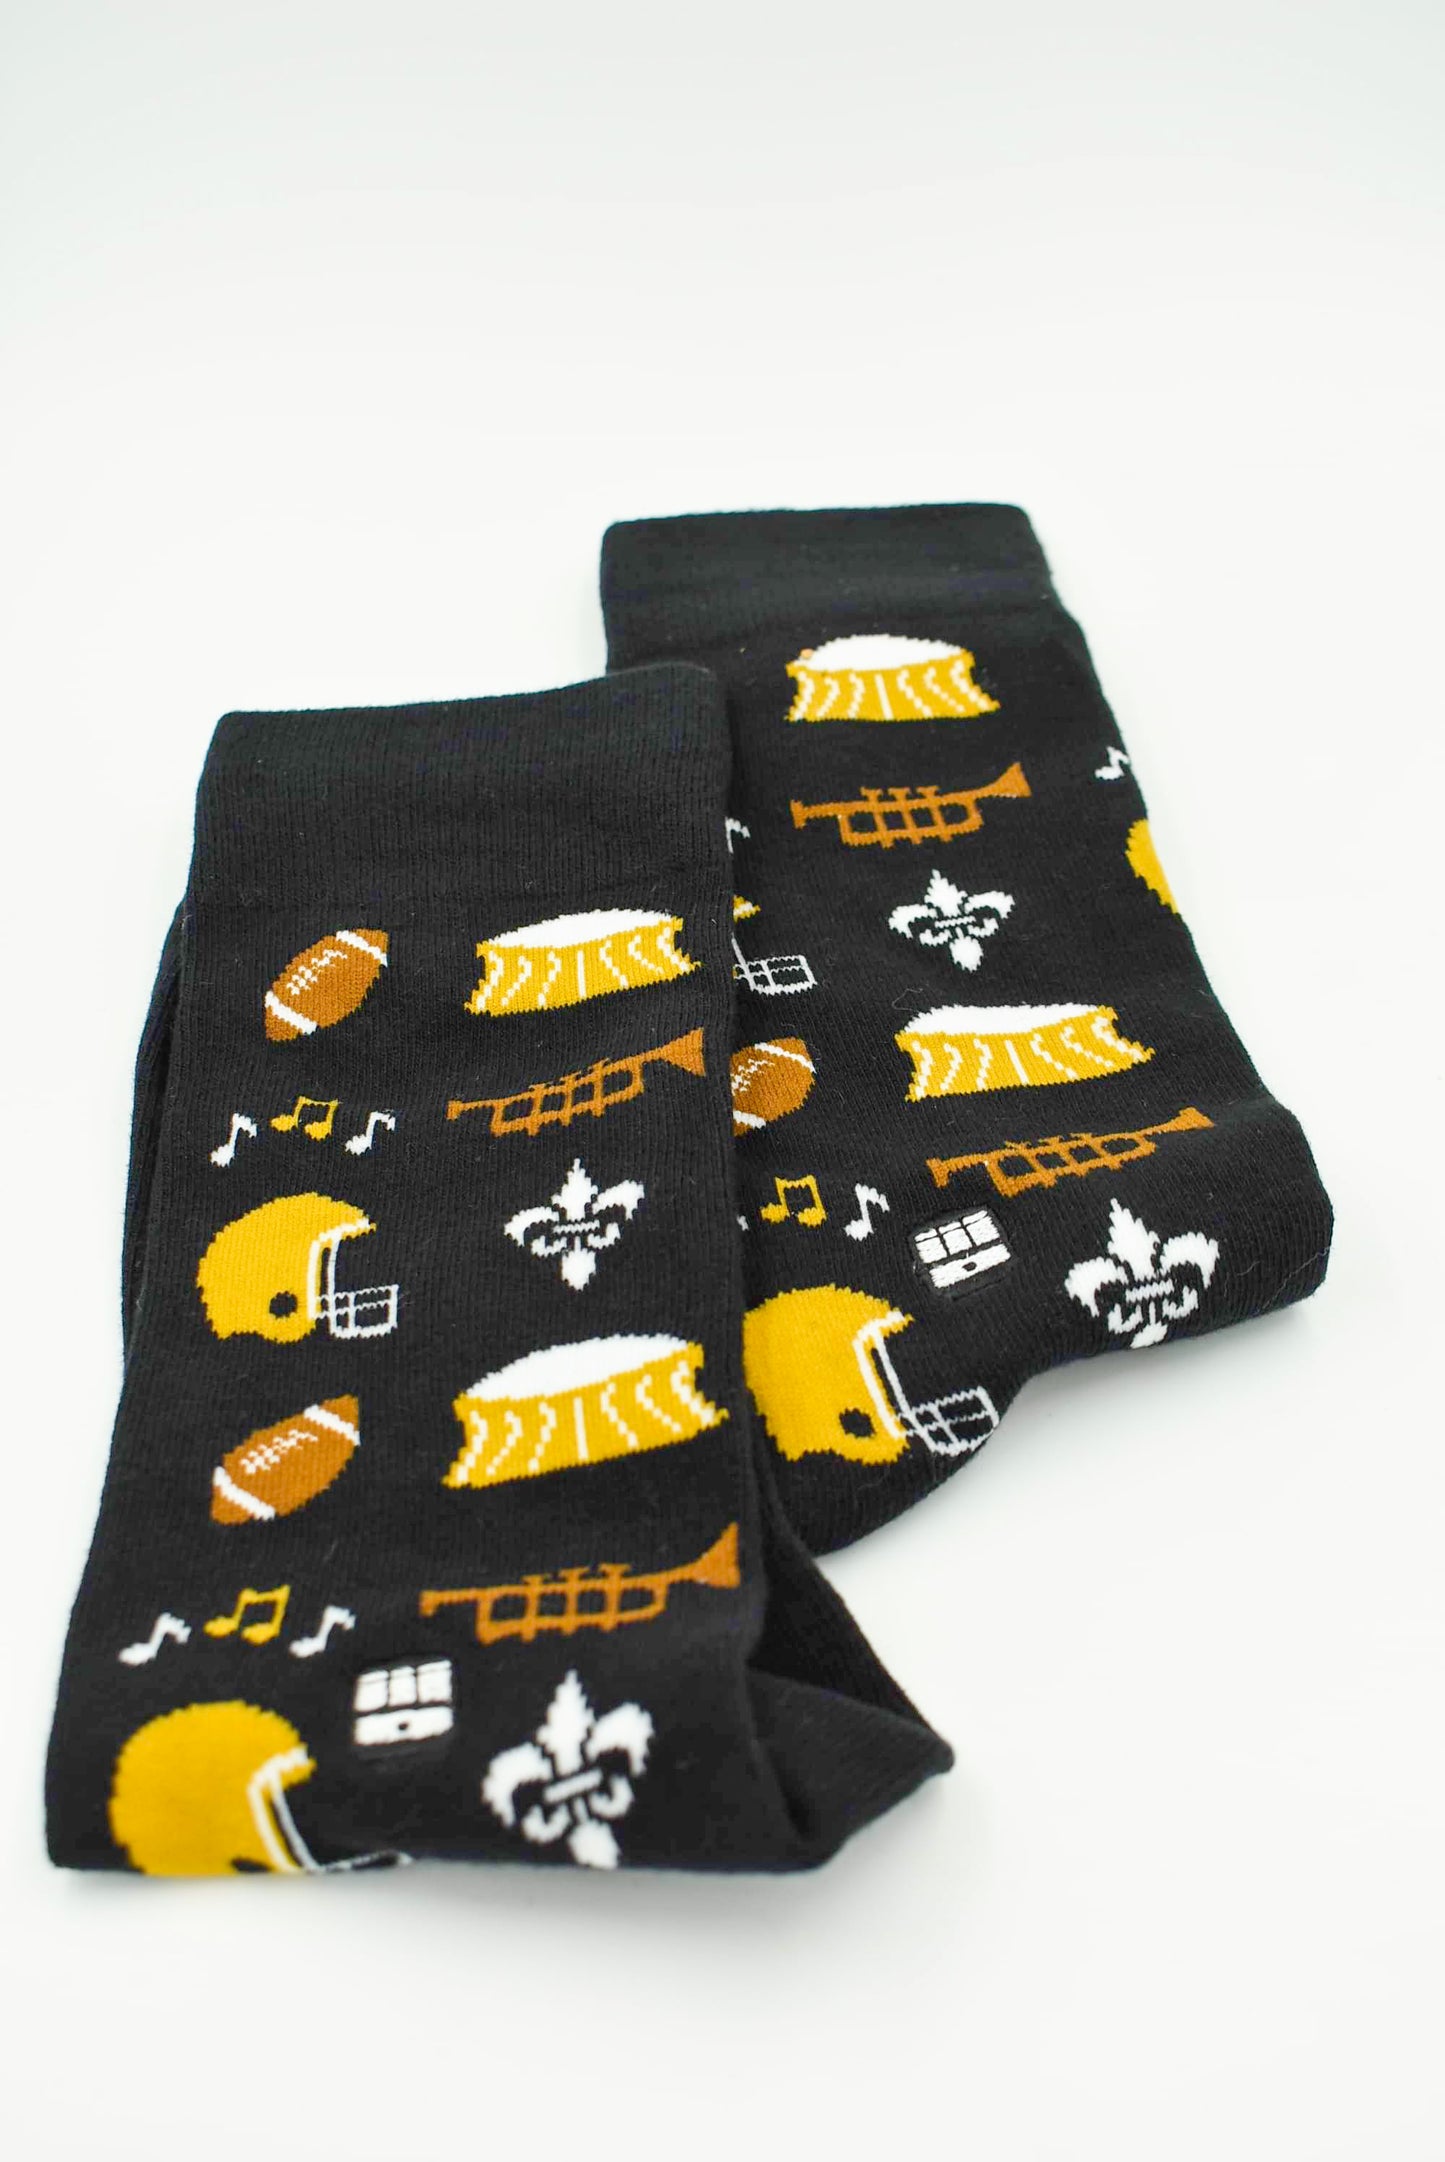 Black Unisex Socks with Trumpet, Music Symbols, Superdome, Footballs, and Fleur De Lis Designs. Made In New Orleans